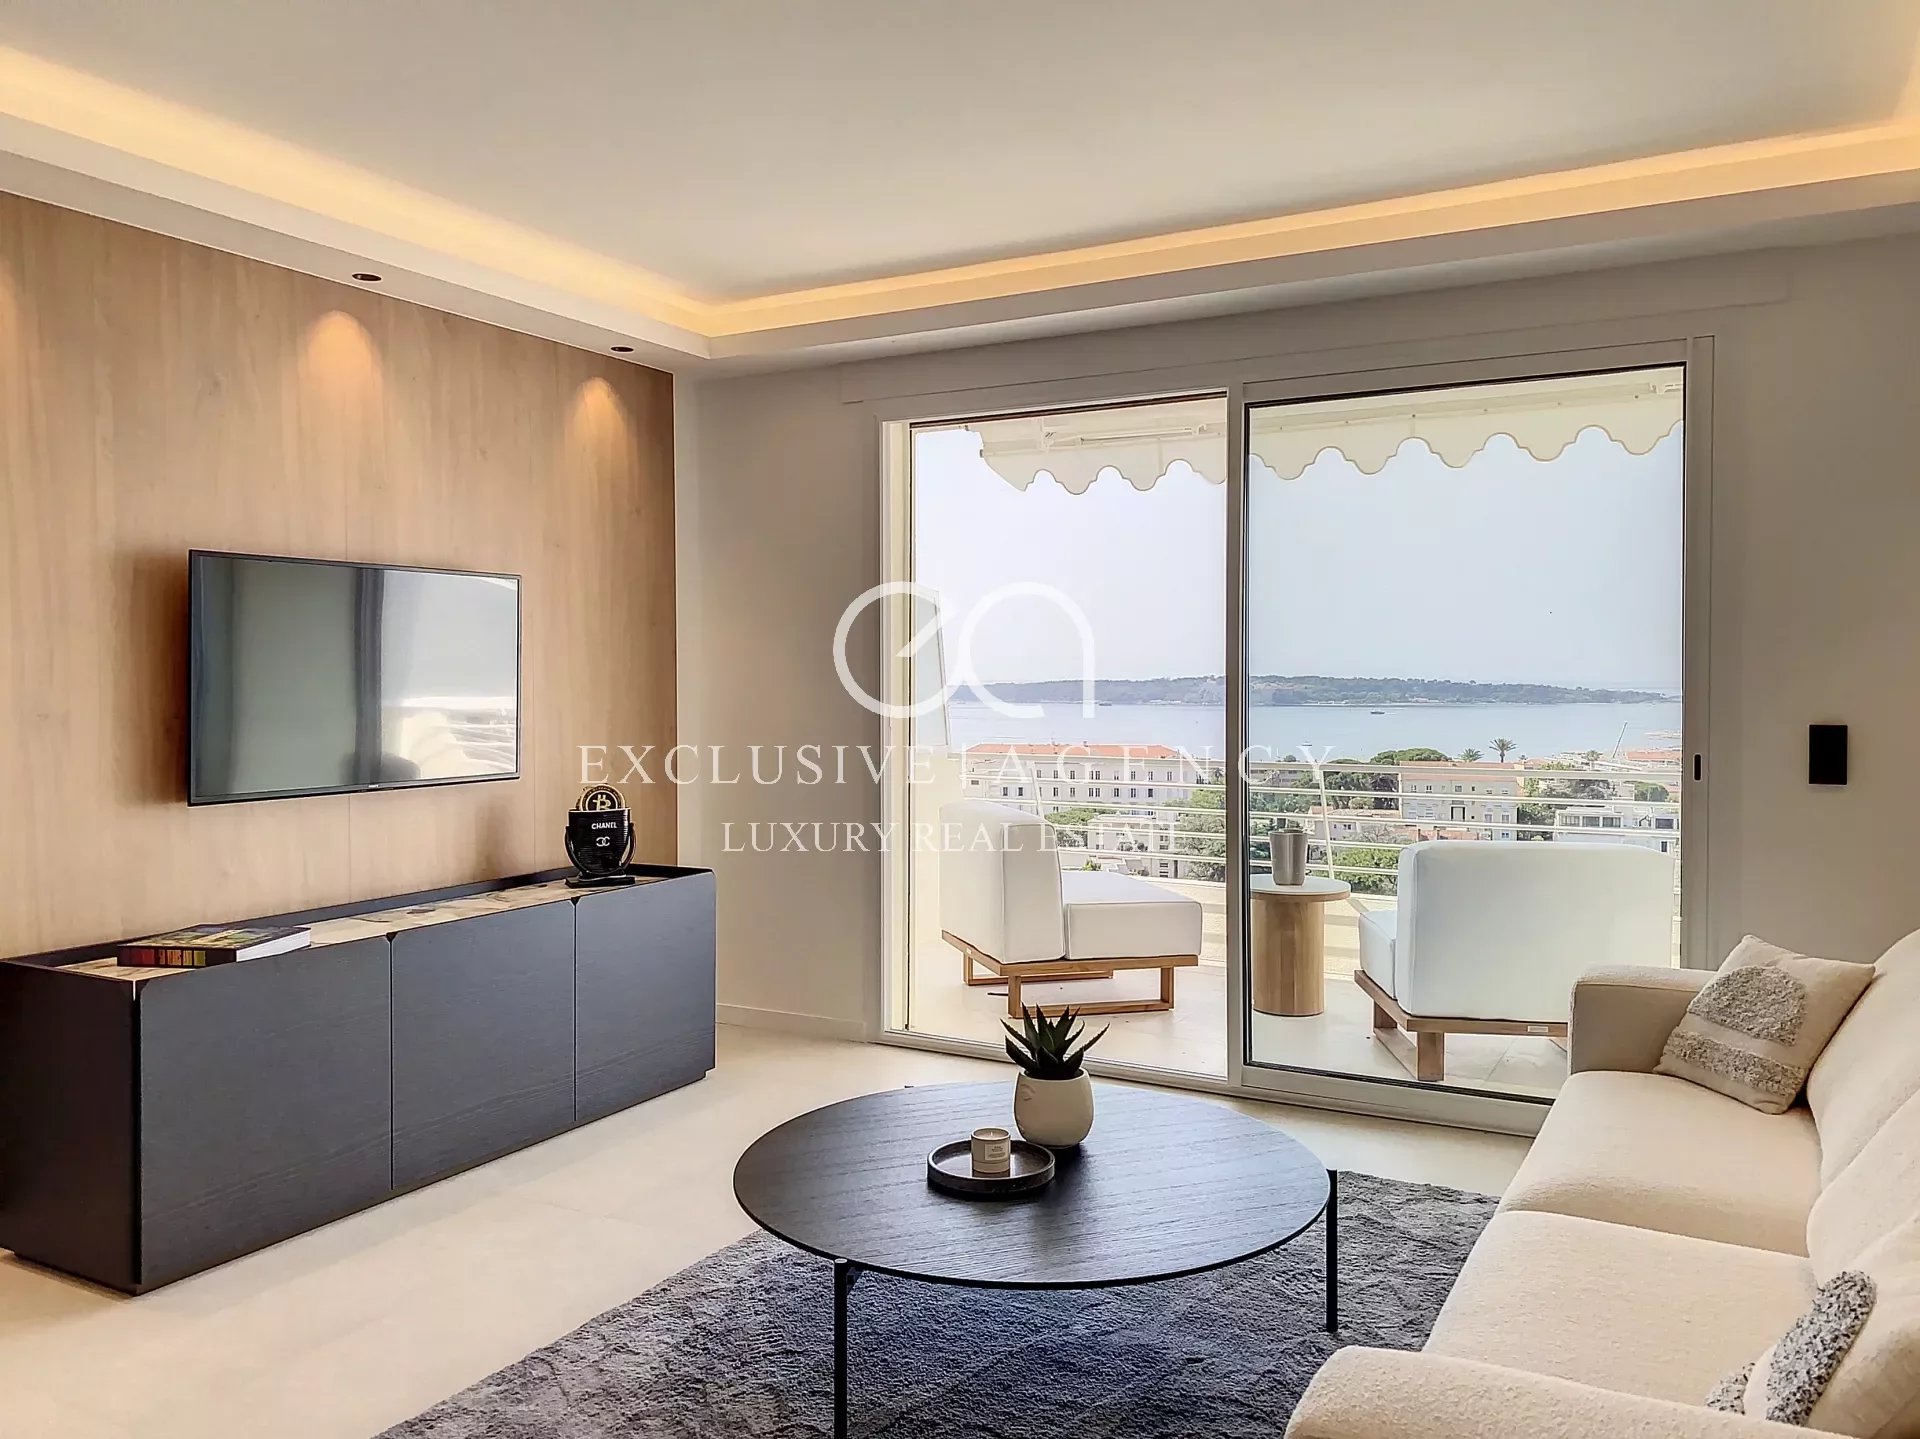 Cannes Basse Californie 3 rooms 70sqm refurbished panoramic sea view